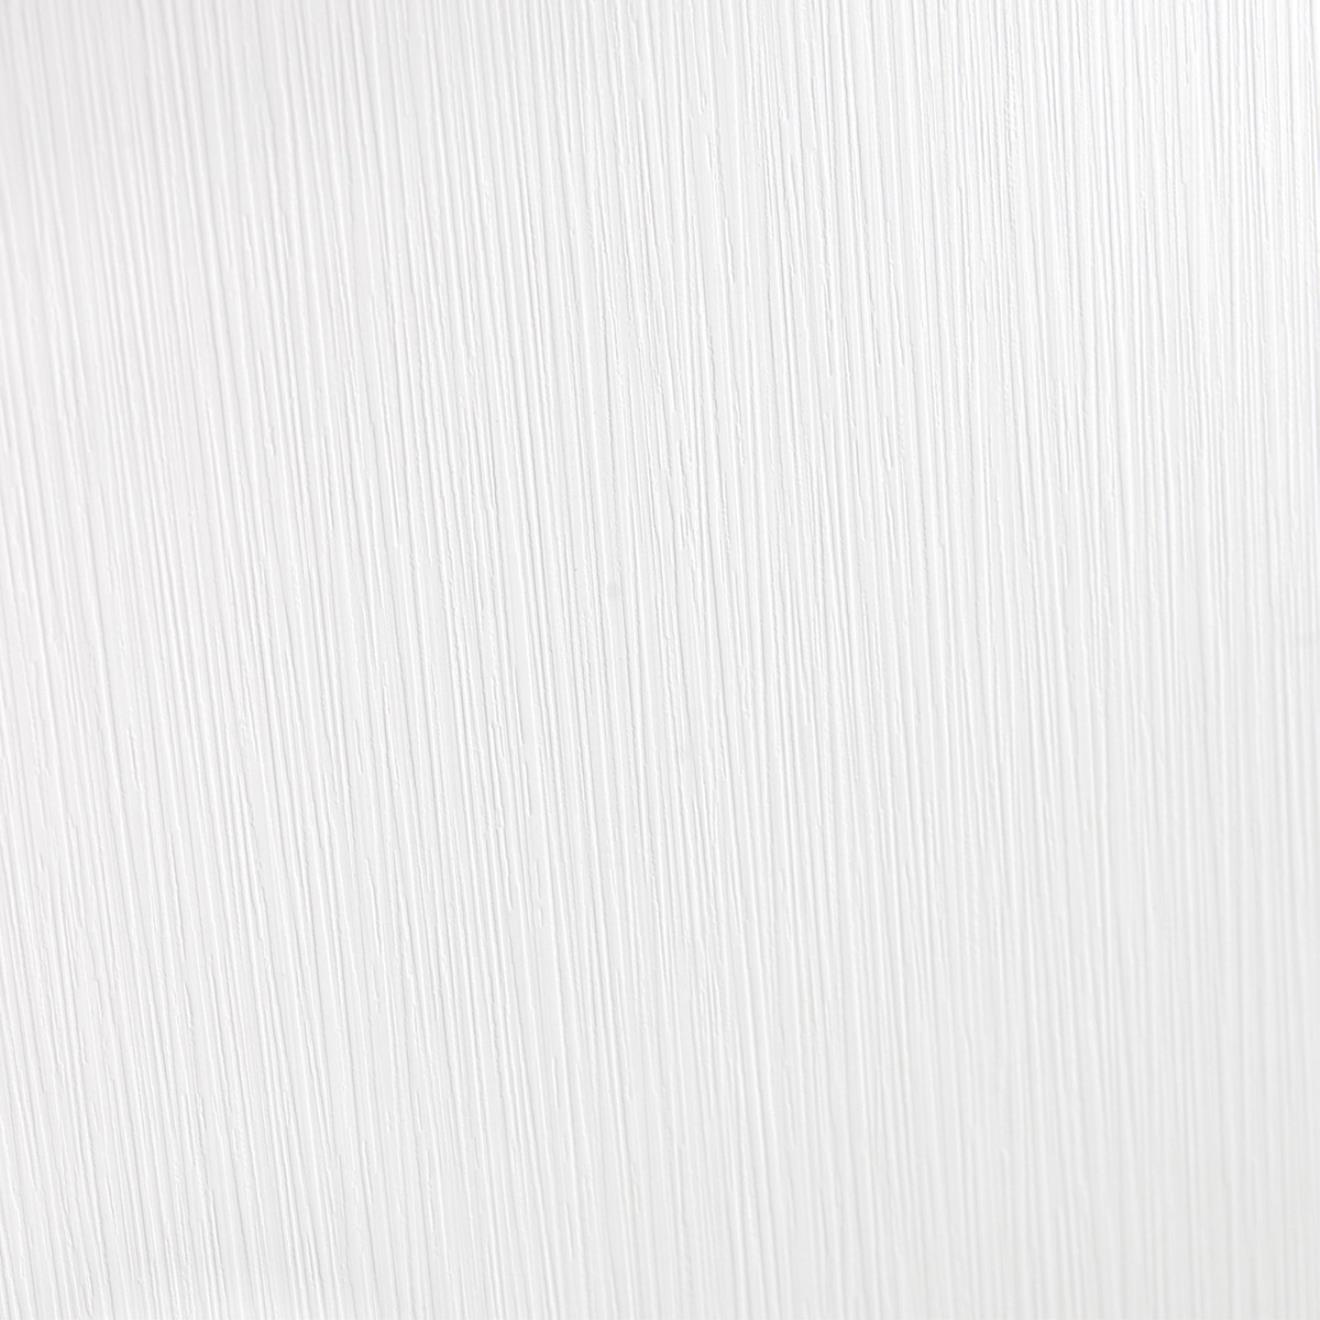 Showerwall Tongue & Groove Bathroom Cladding Linea White 2440 x 600 x 10.5mm